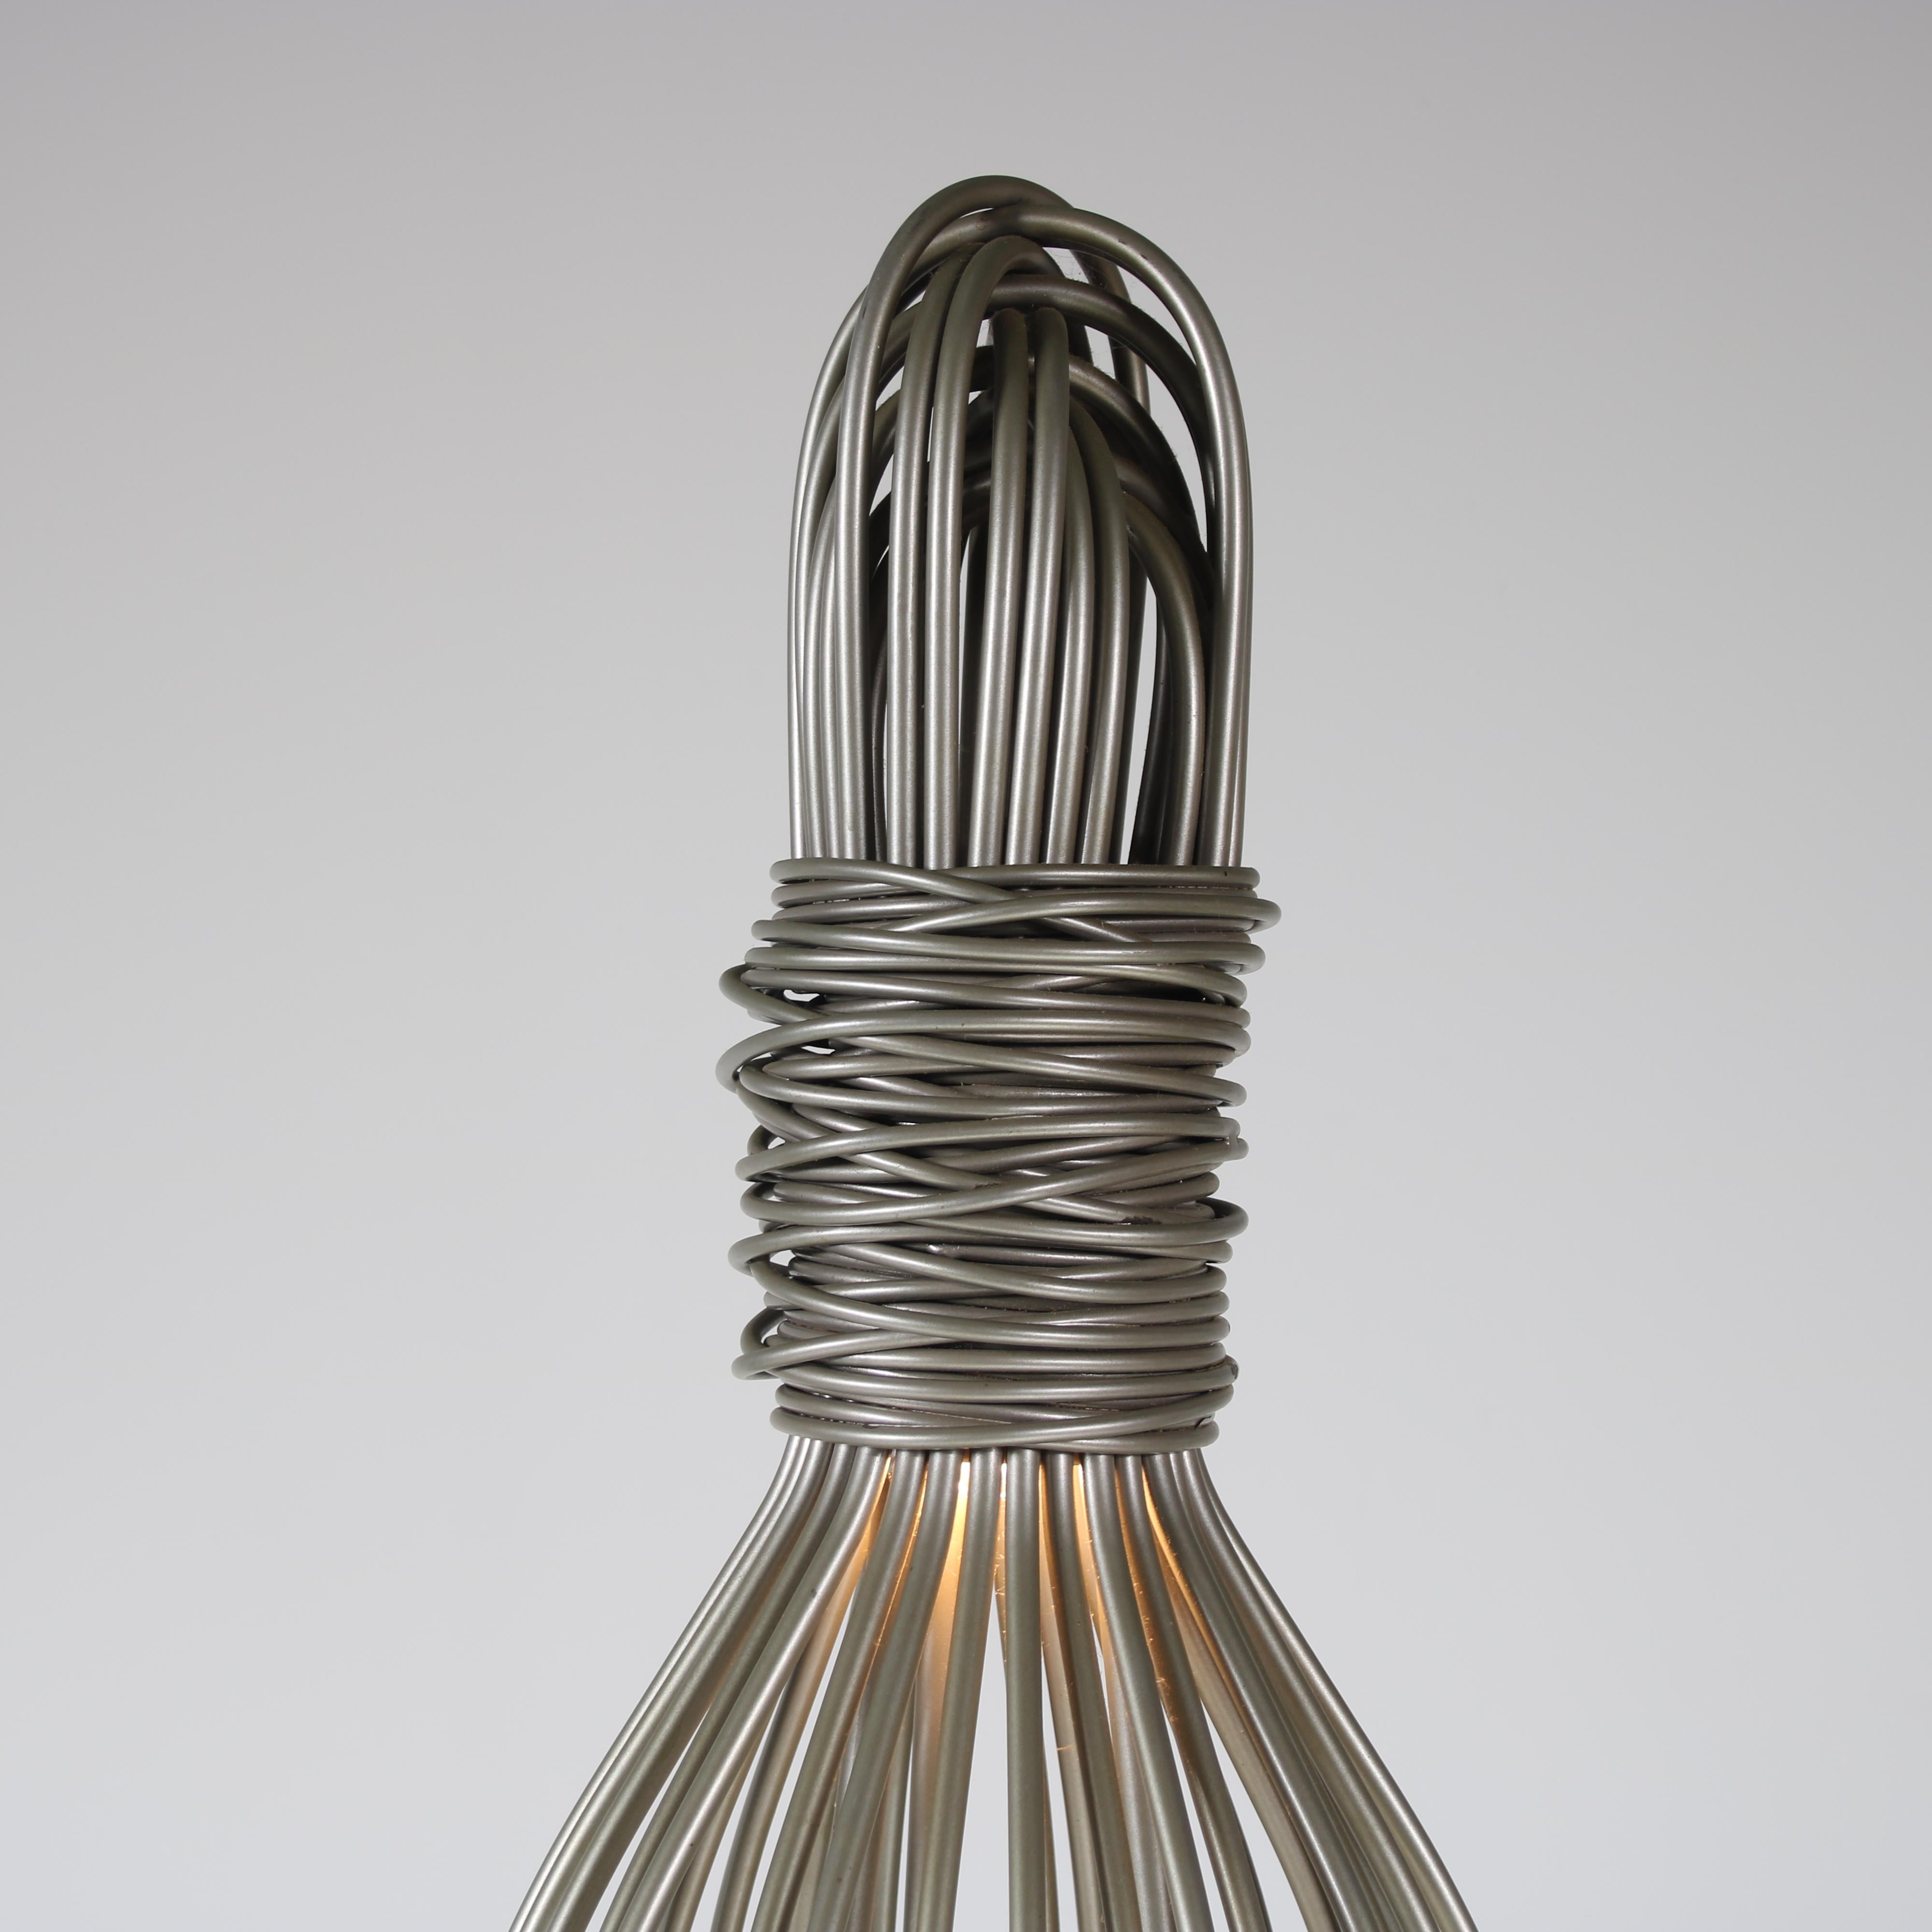 European “Hugo” Floor Lamp / Light Sculpture by Jean-Francois Crochet for Terzani, Italy  For Sale